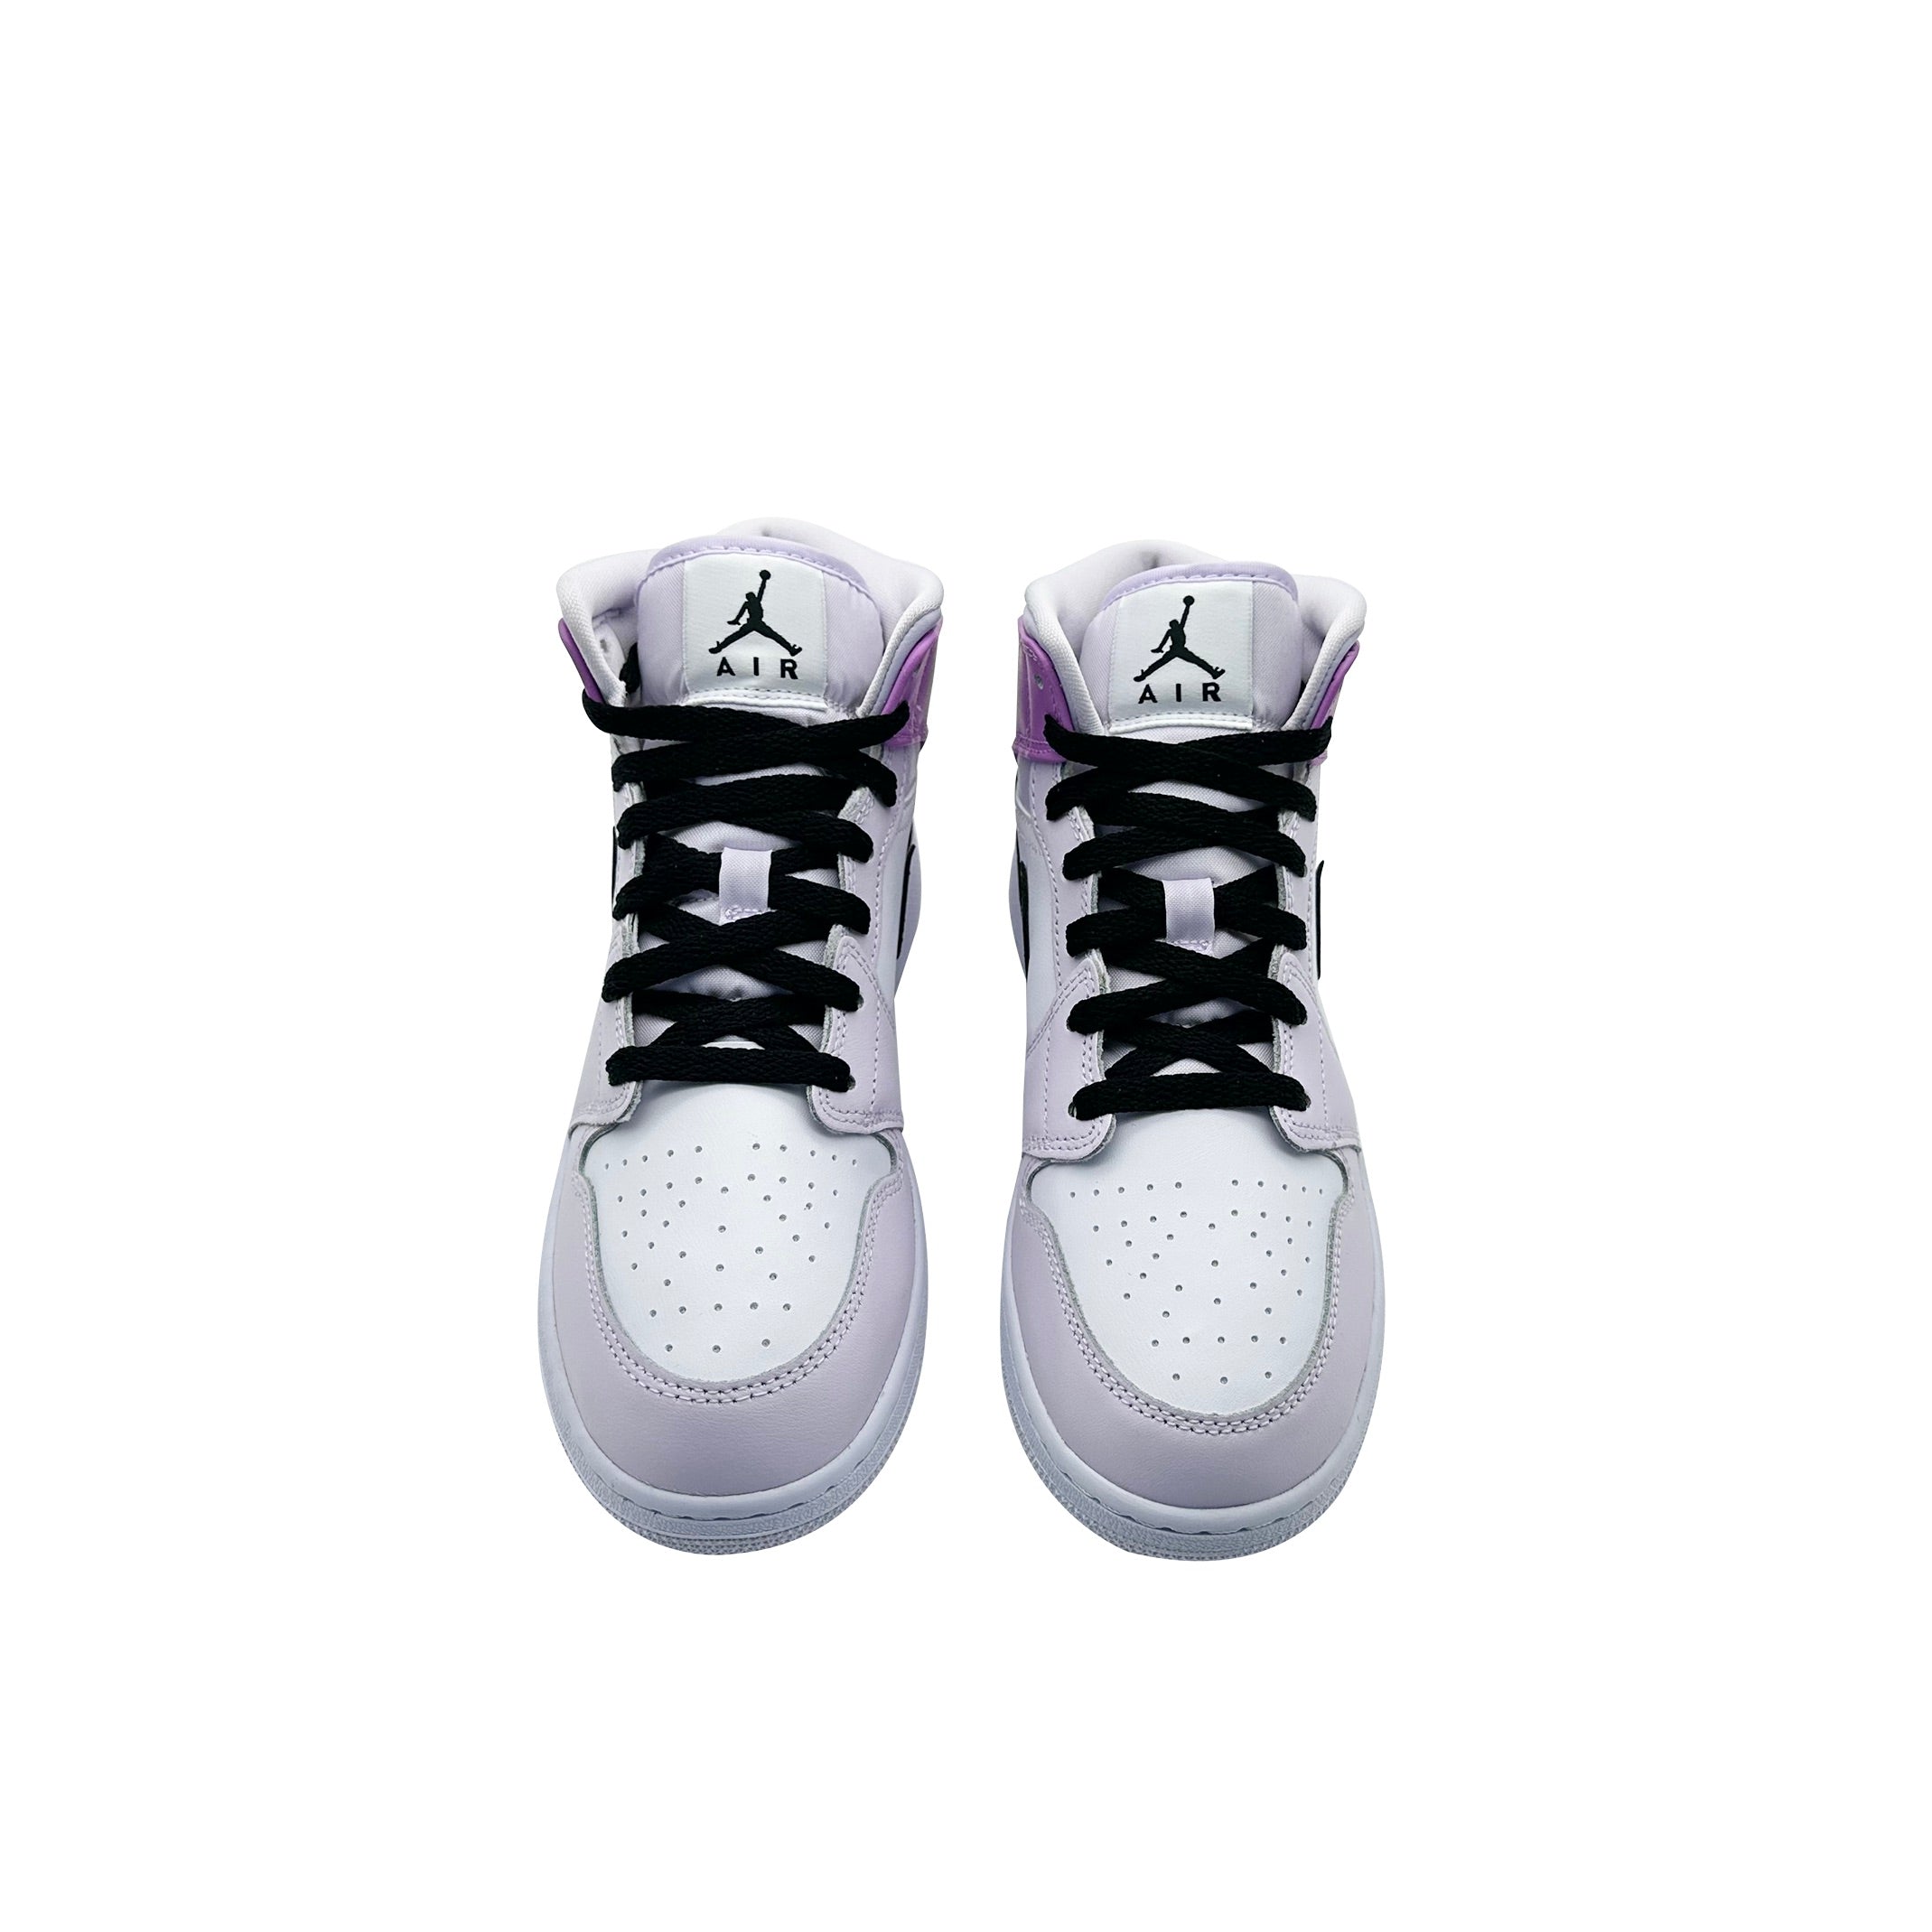 Nike Air Jordan 1 Mid Barely Grape GS